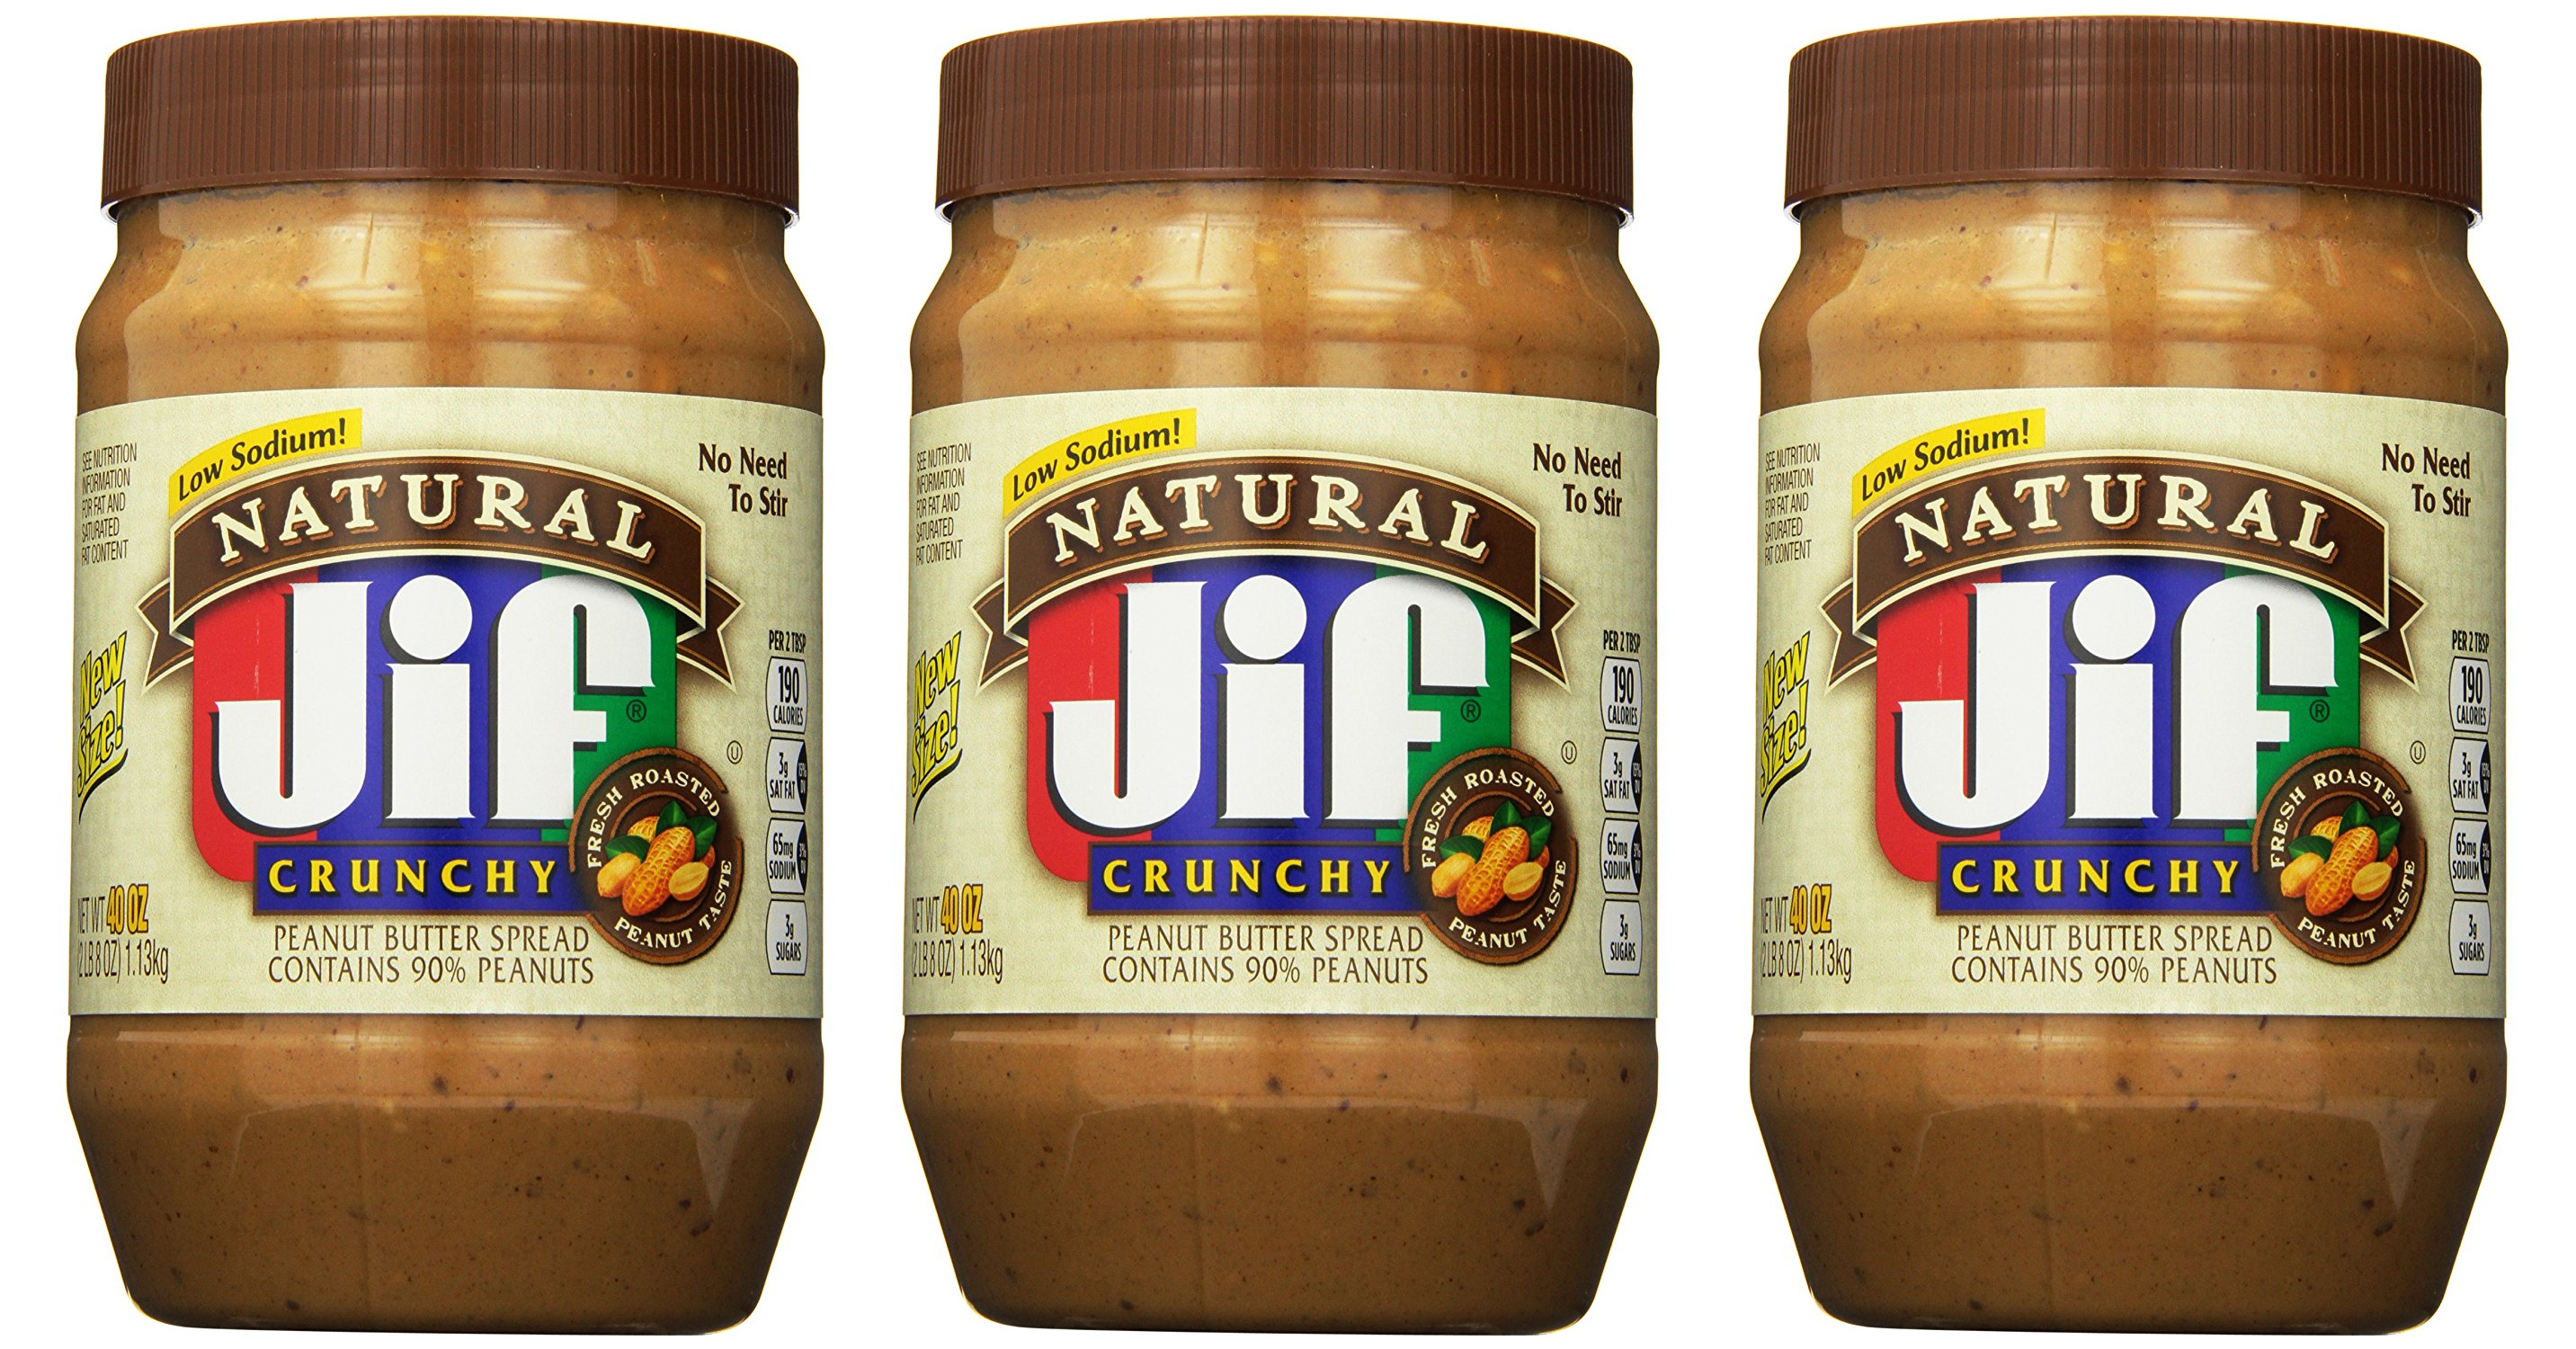 Jif Natural Crunchy Peanut Butter Spread 40oz Jar Only $4.25 Each!